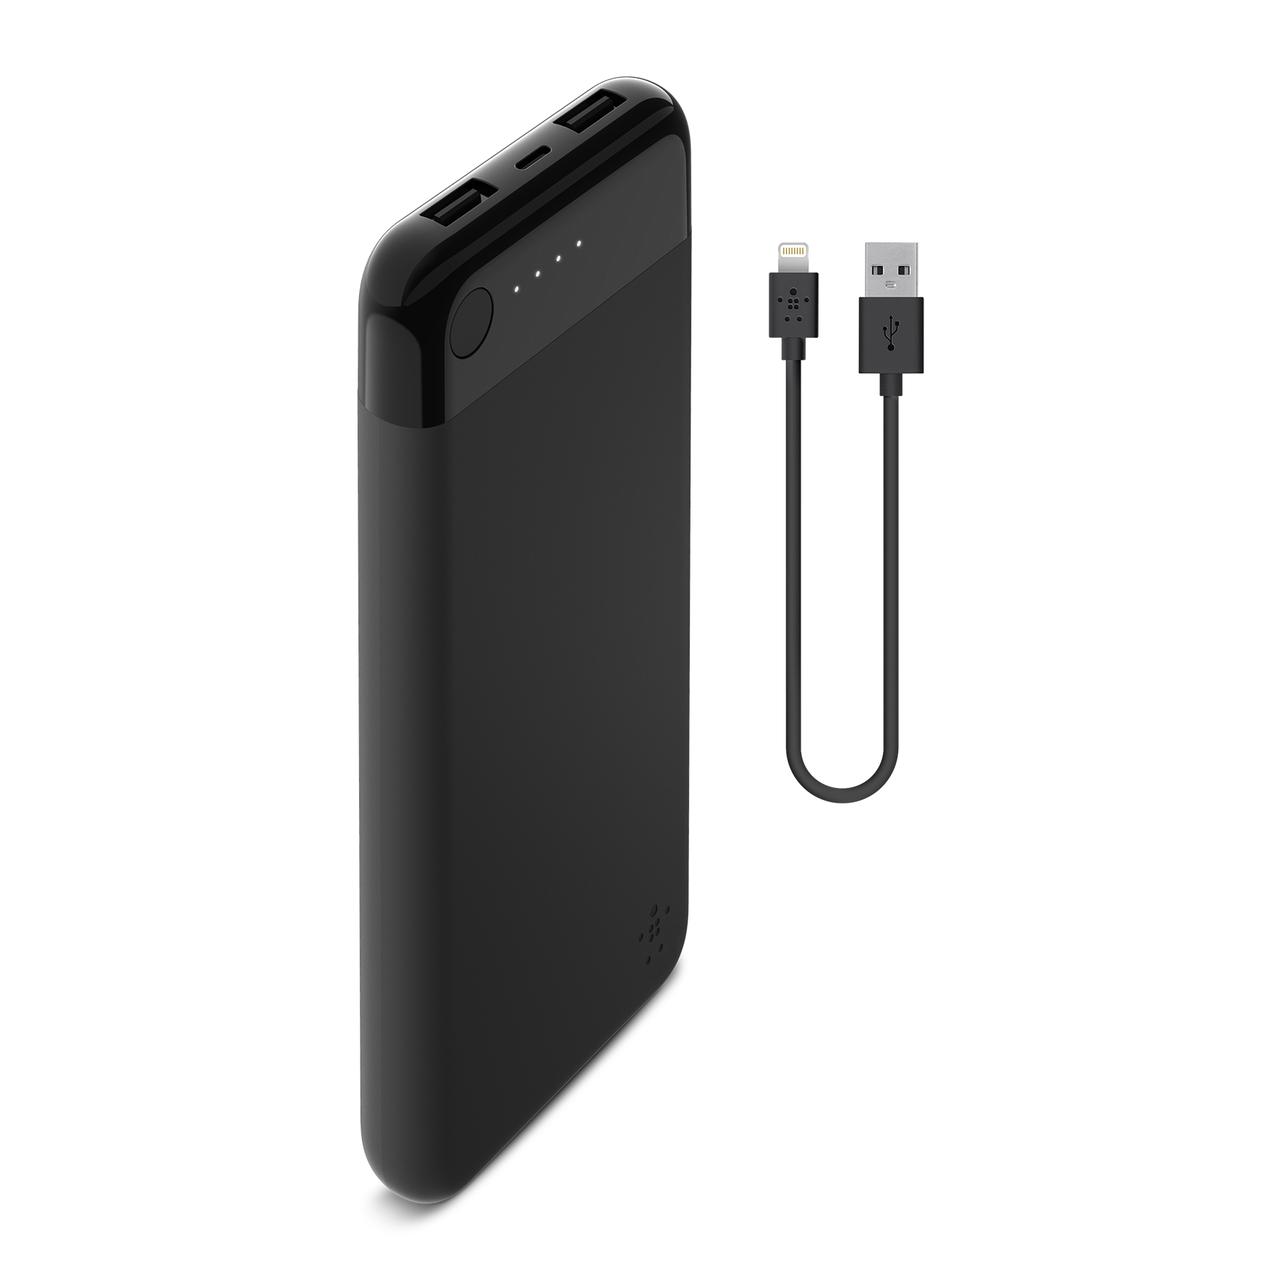 Batterie externe Belkin avec support iPhone - C&C Apple Premium Reseller